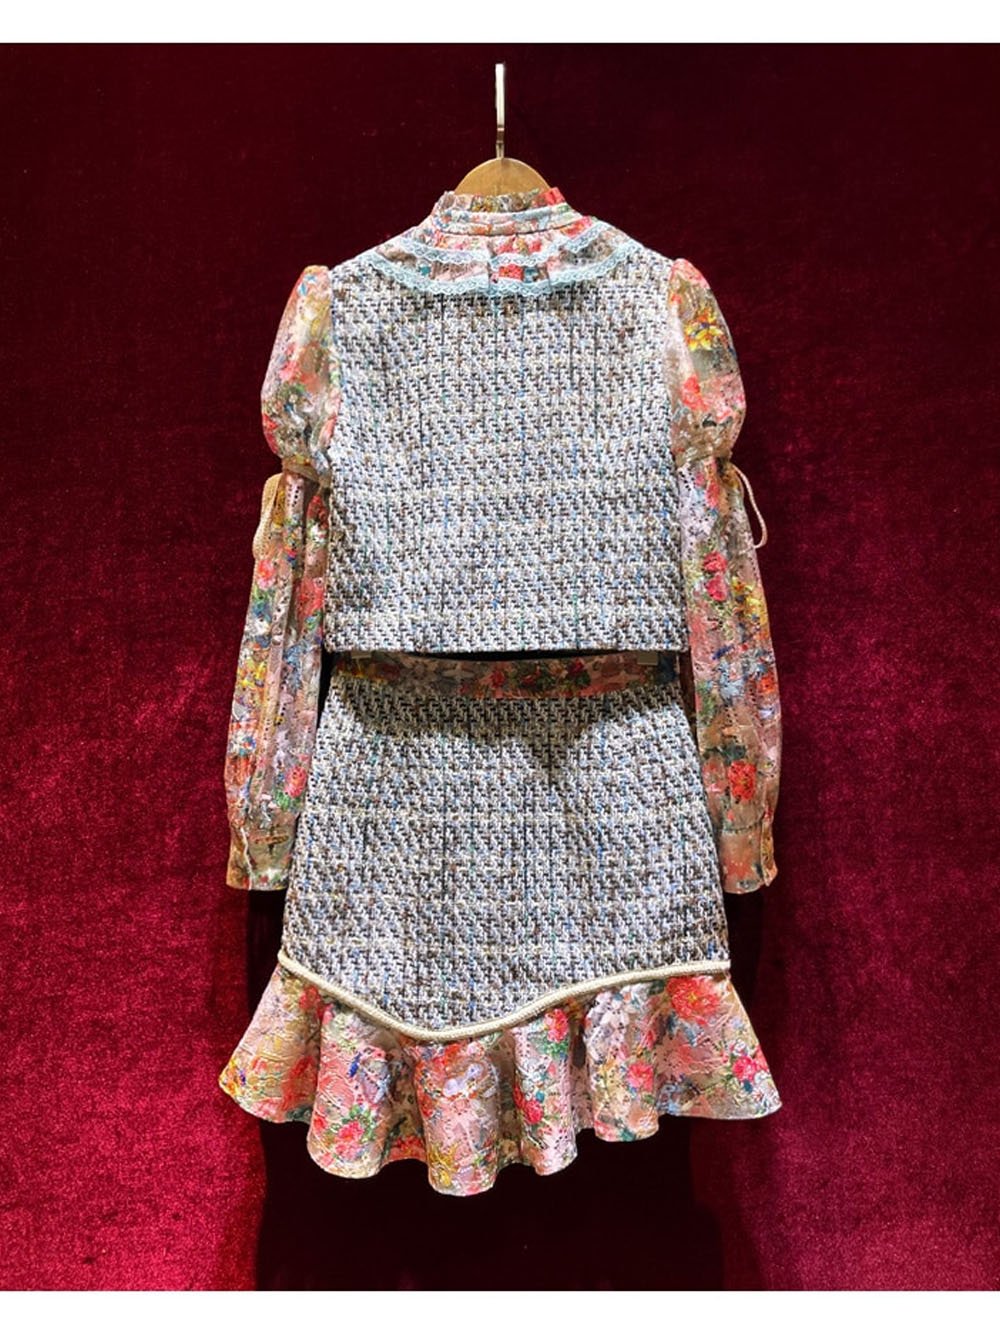 PERLA Tweed Top & Skirt Set